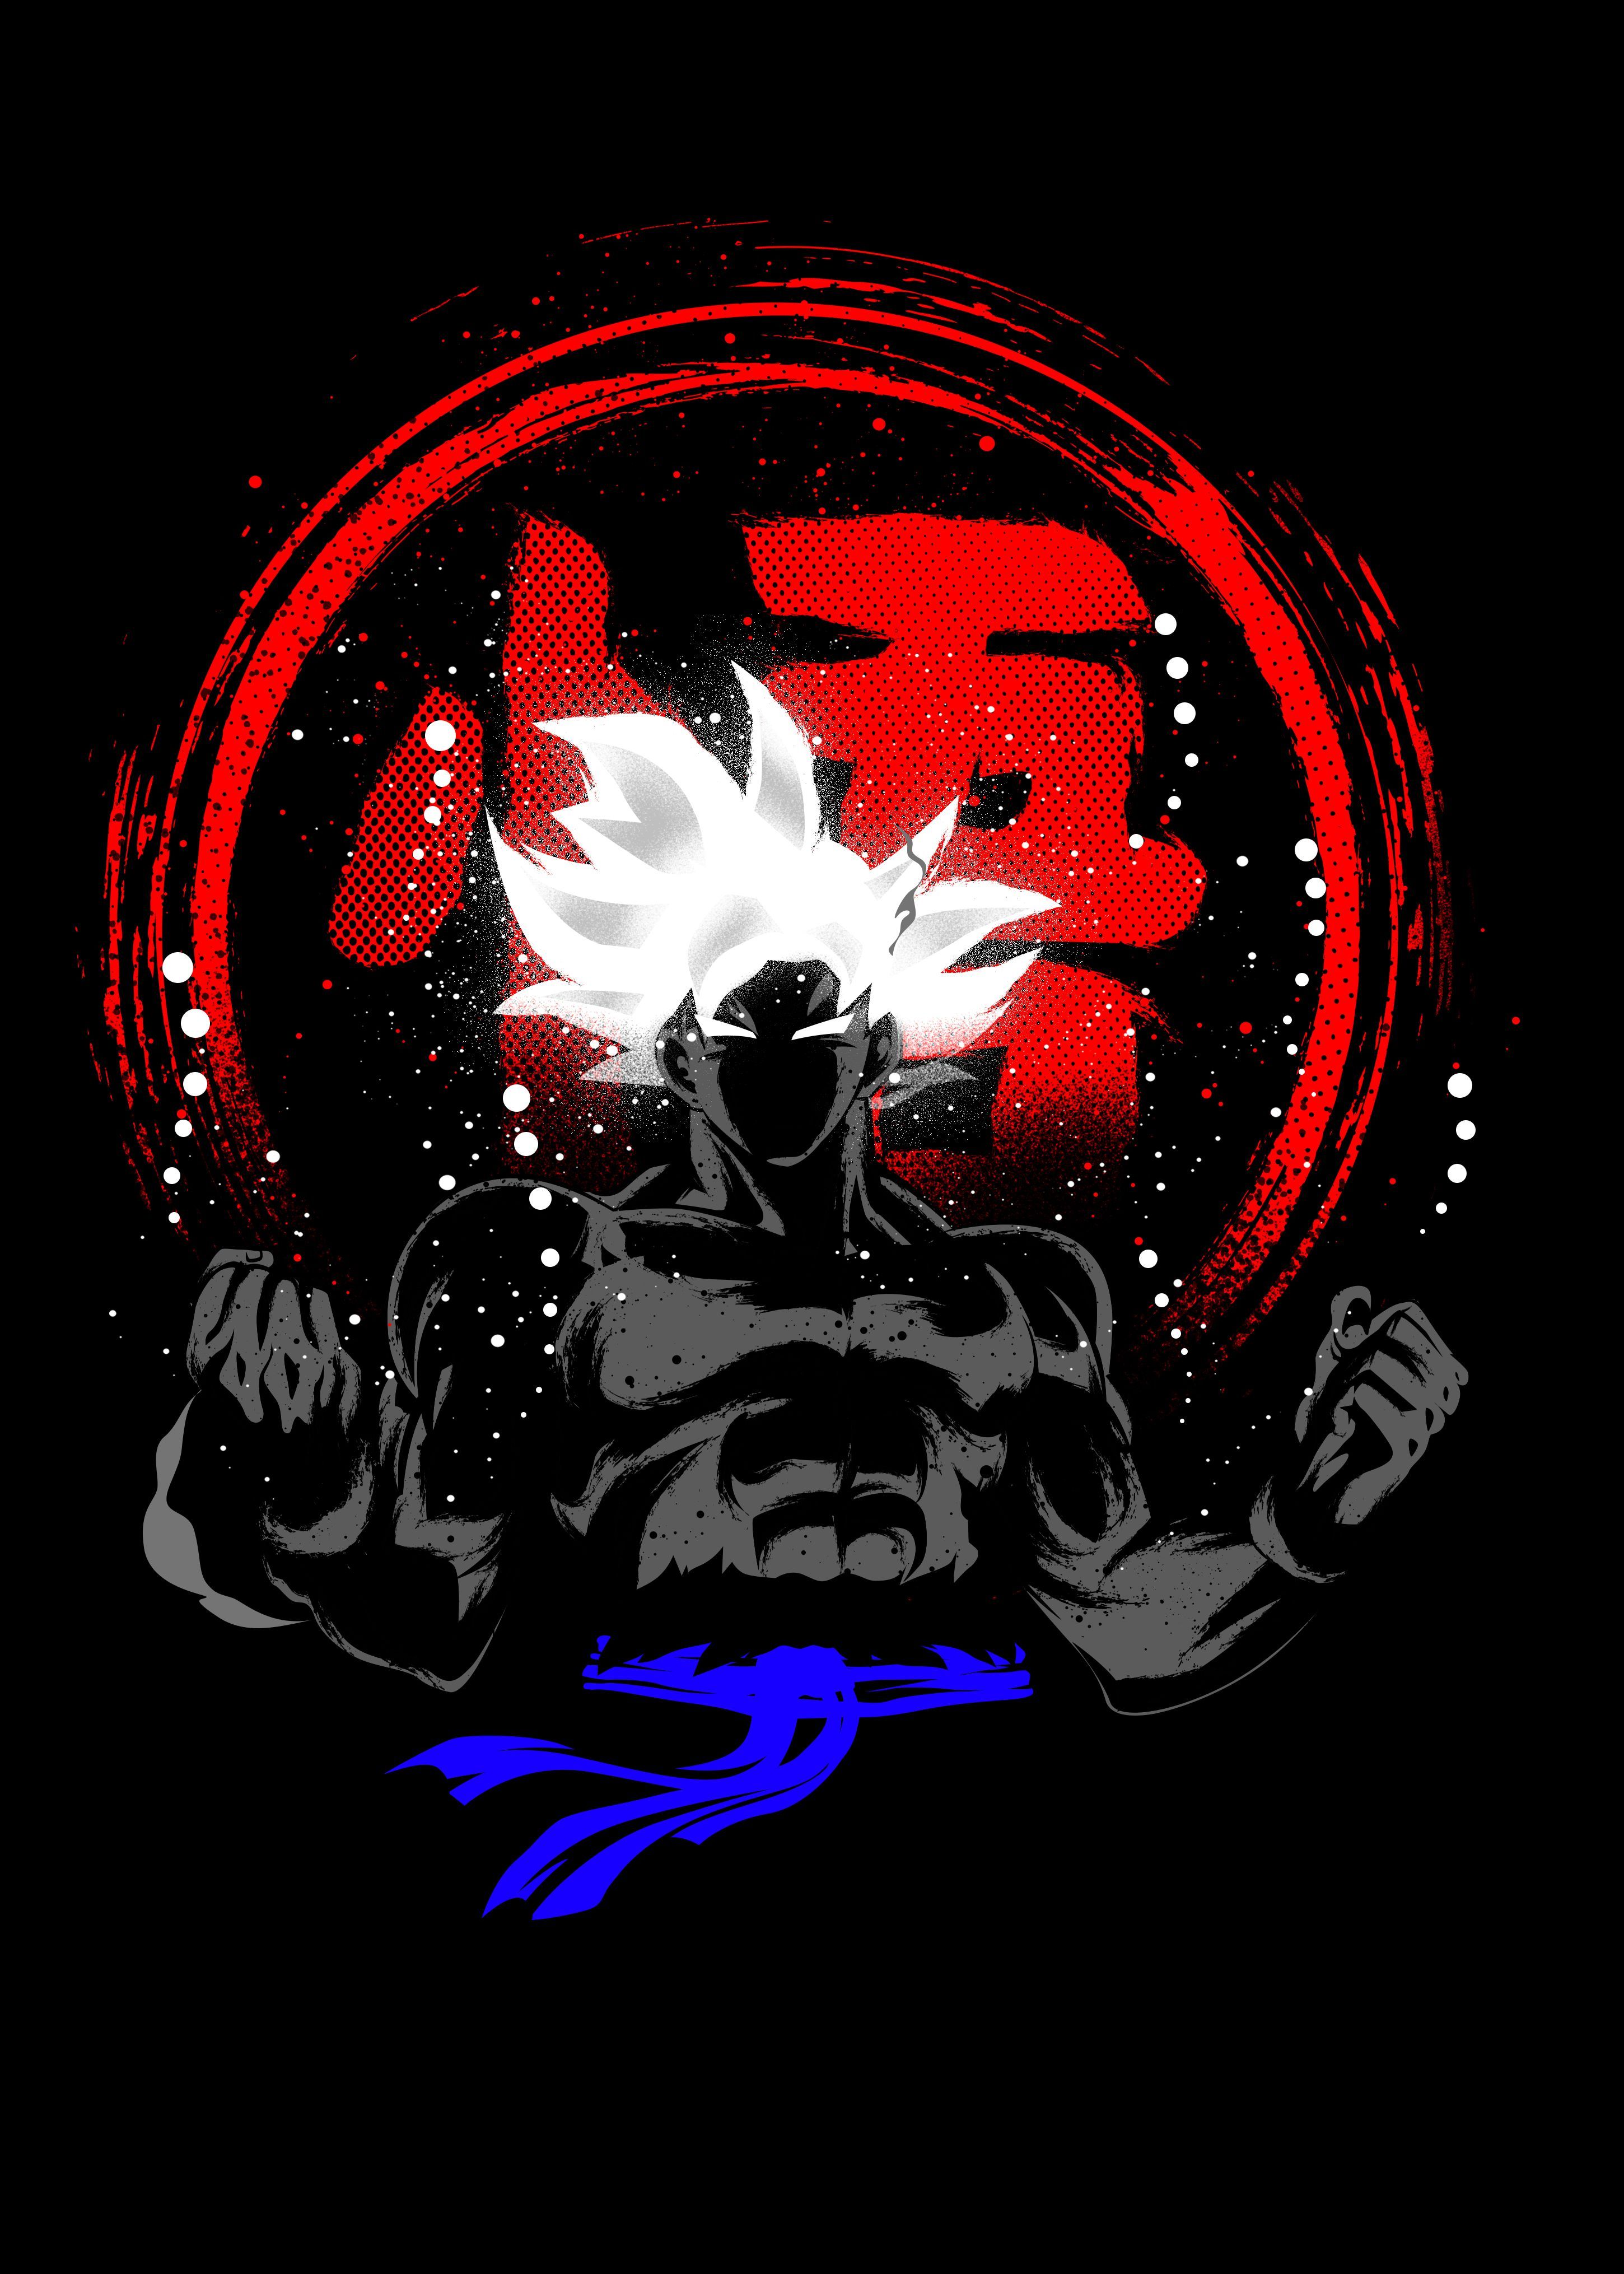 Ultra Instinct Power' Metal Poster Print Twenty. Displate. Dragon ball wallpaper, Anime dragon ball super, Dragon ball art